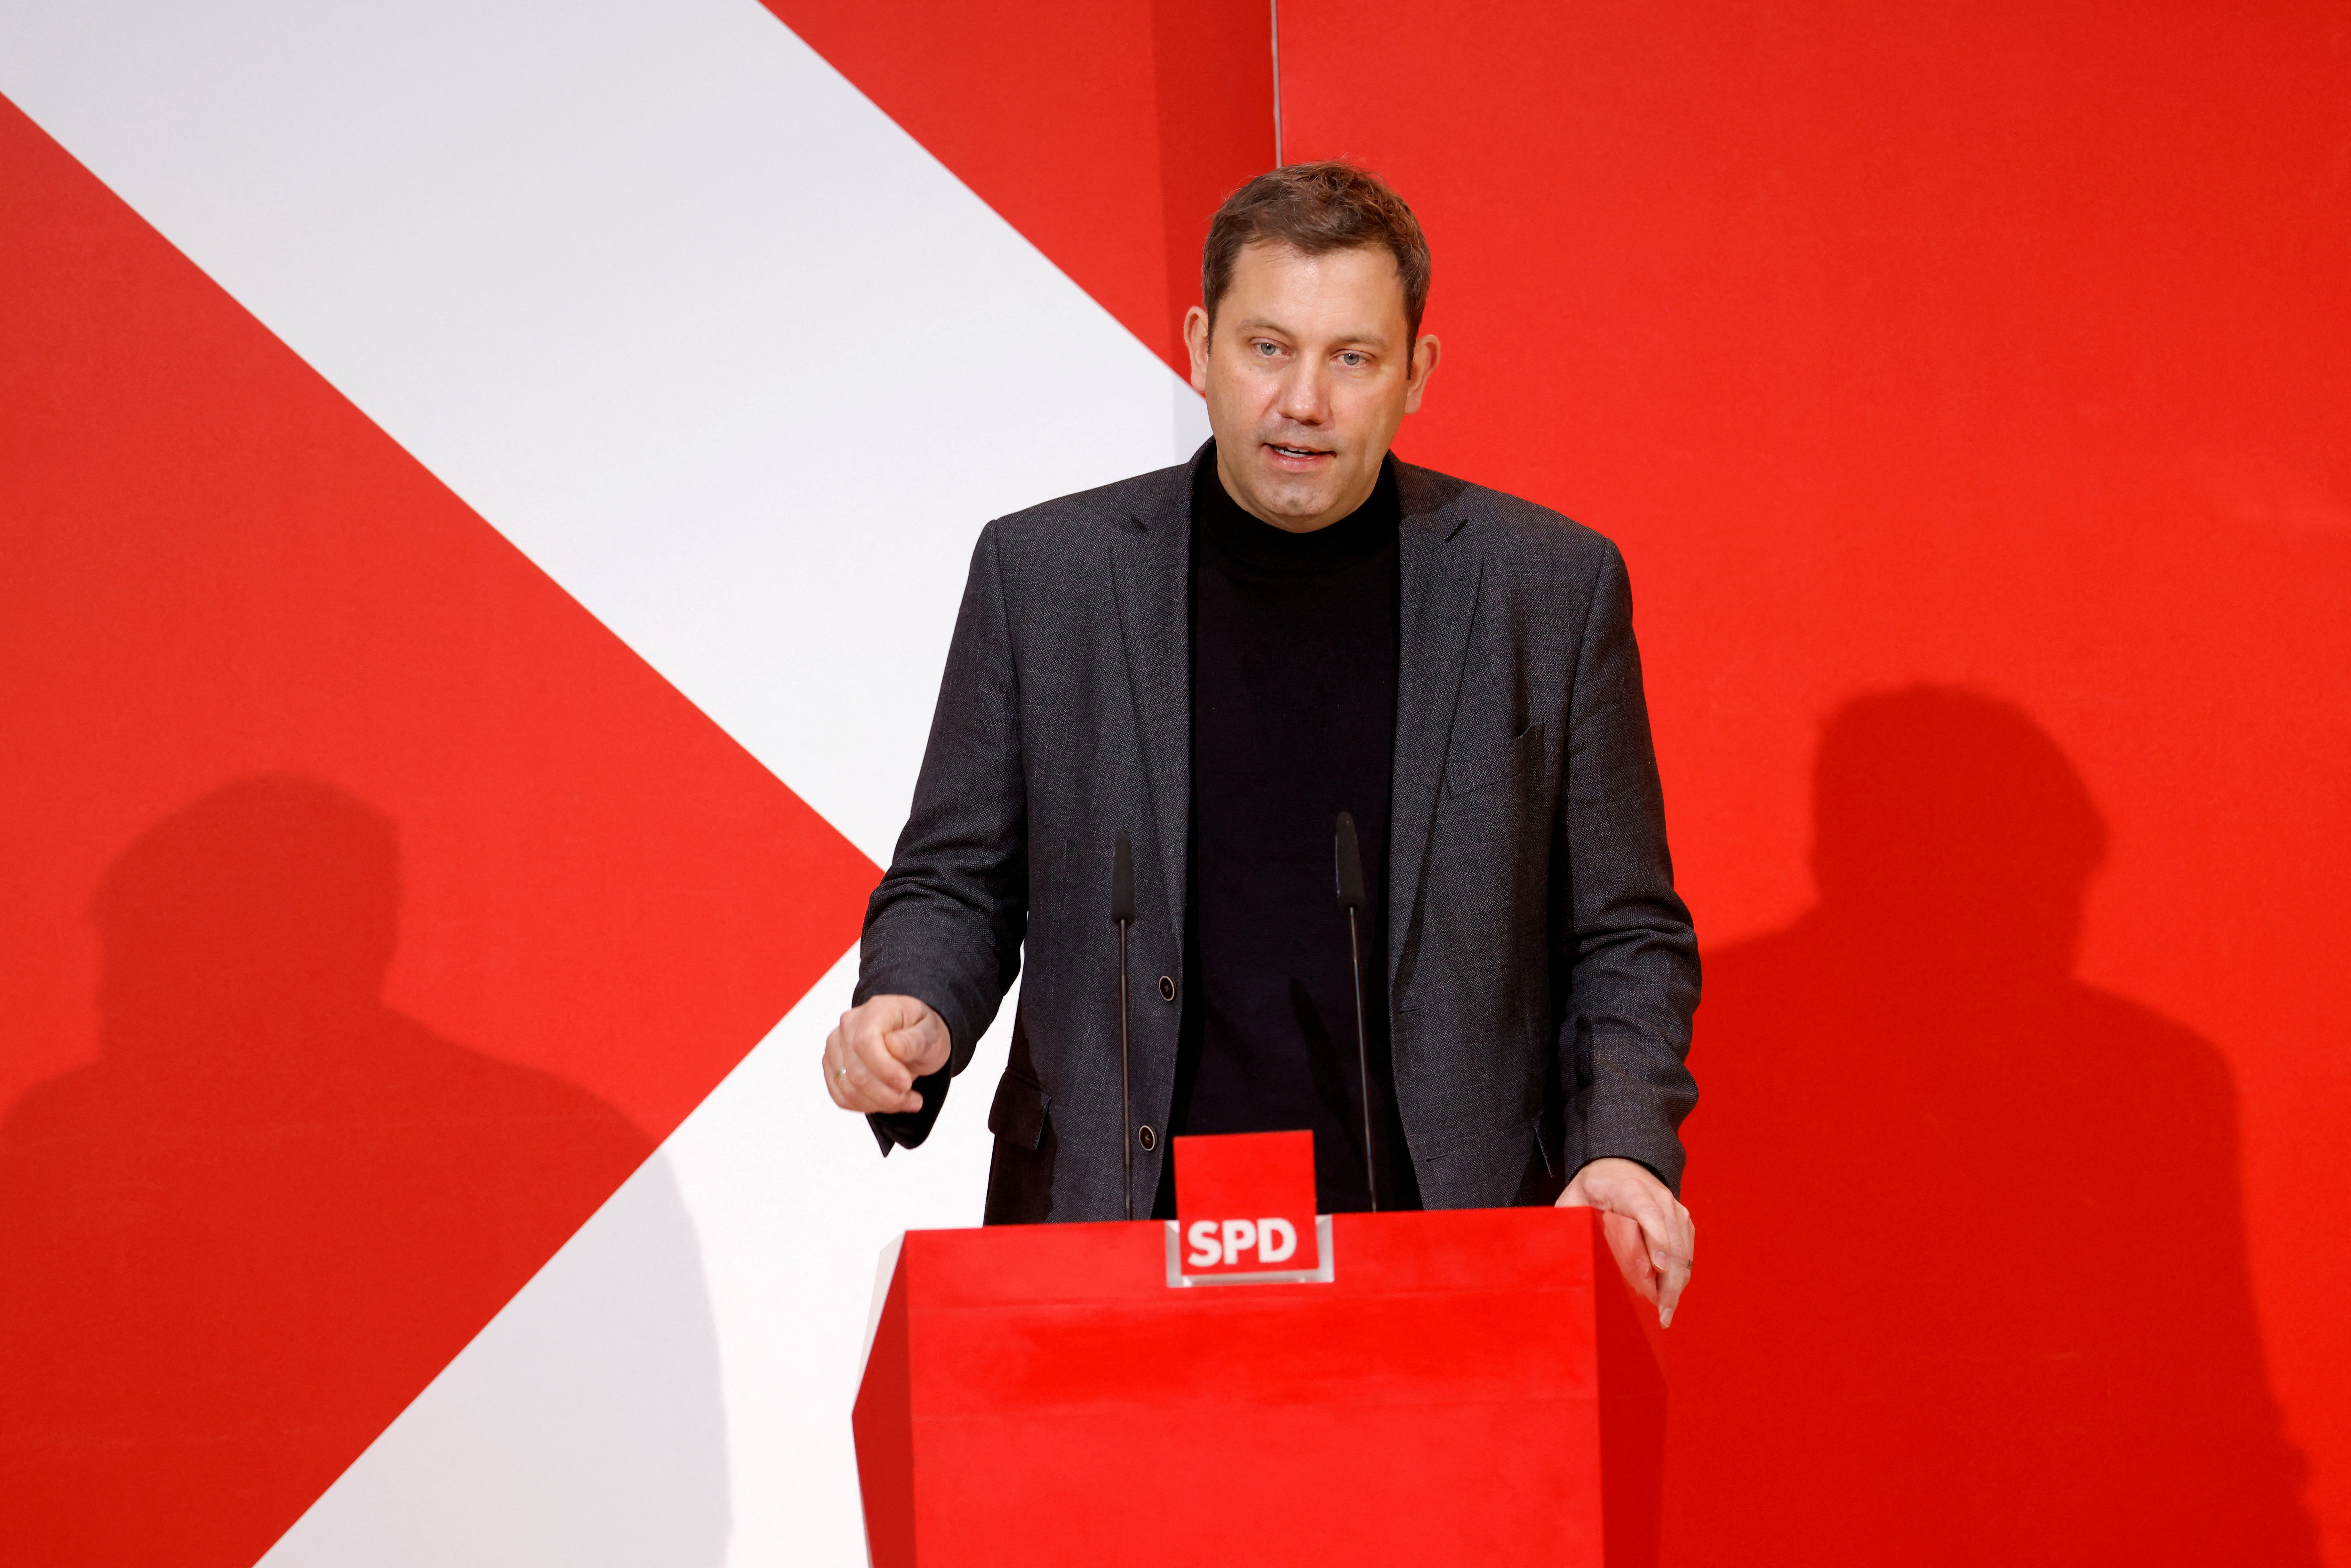 The co-leader of Germany's Social Democratic (SPD) party, Lars Klingbeil, addresses the media in Berlin